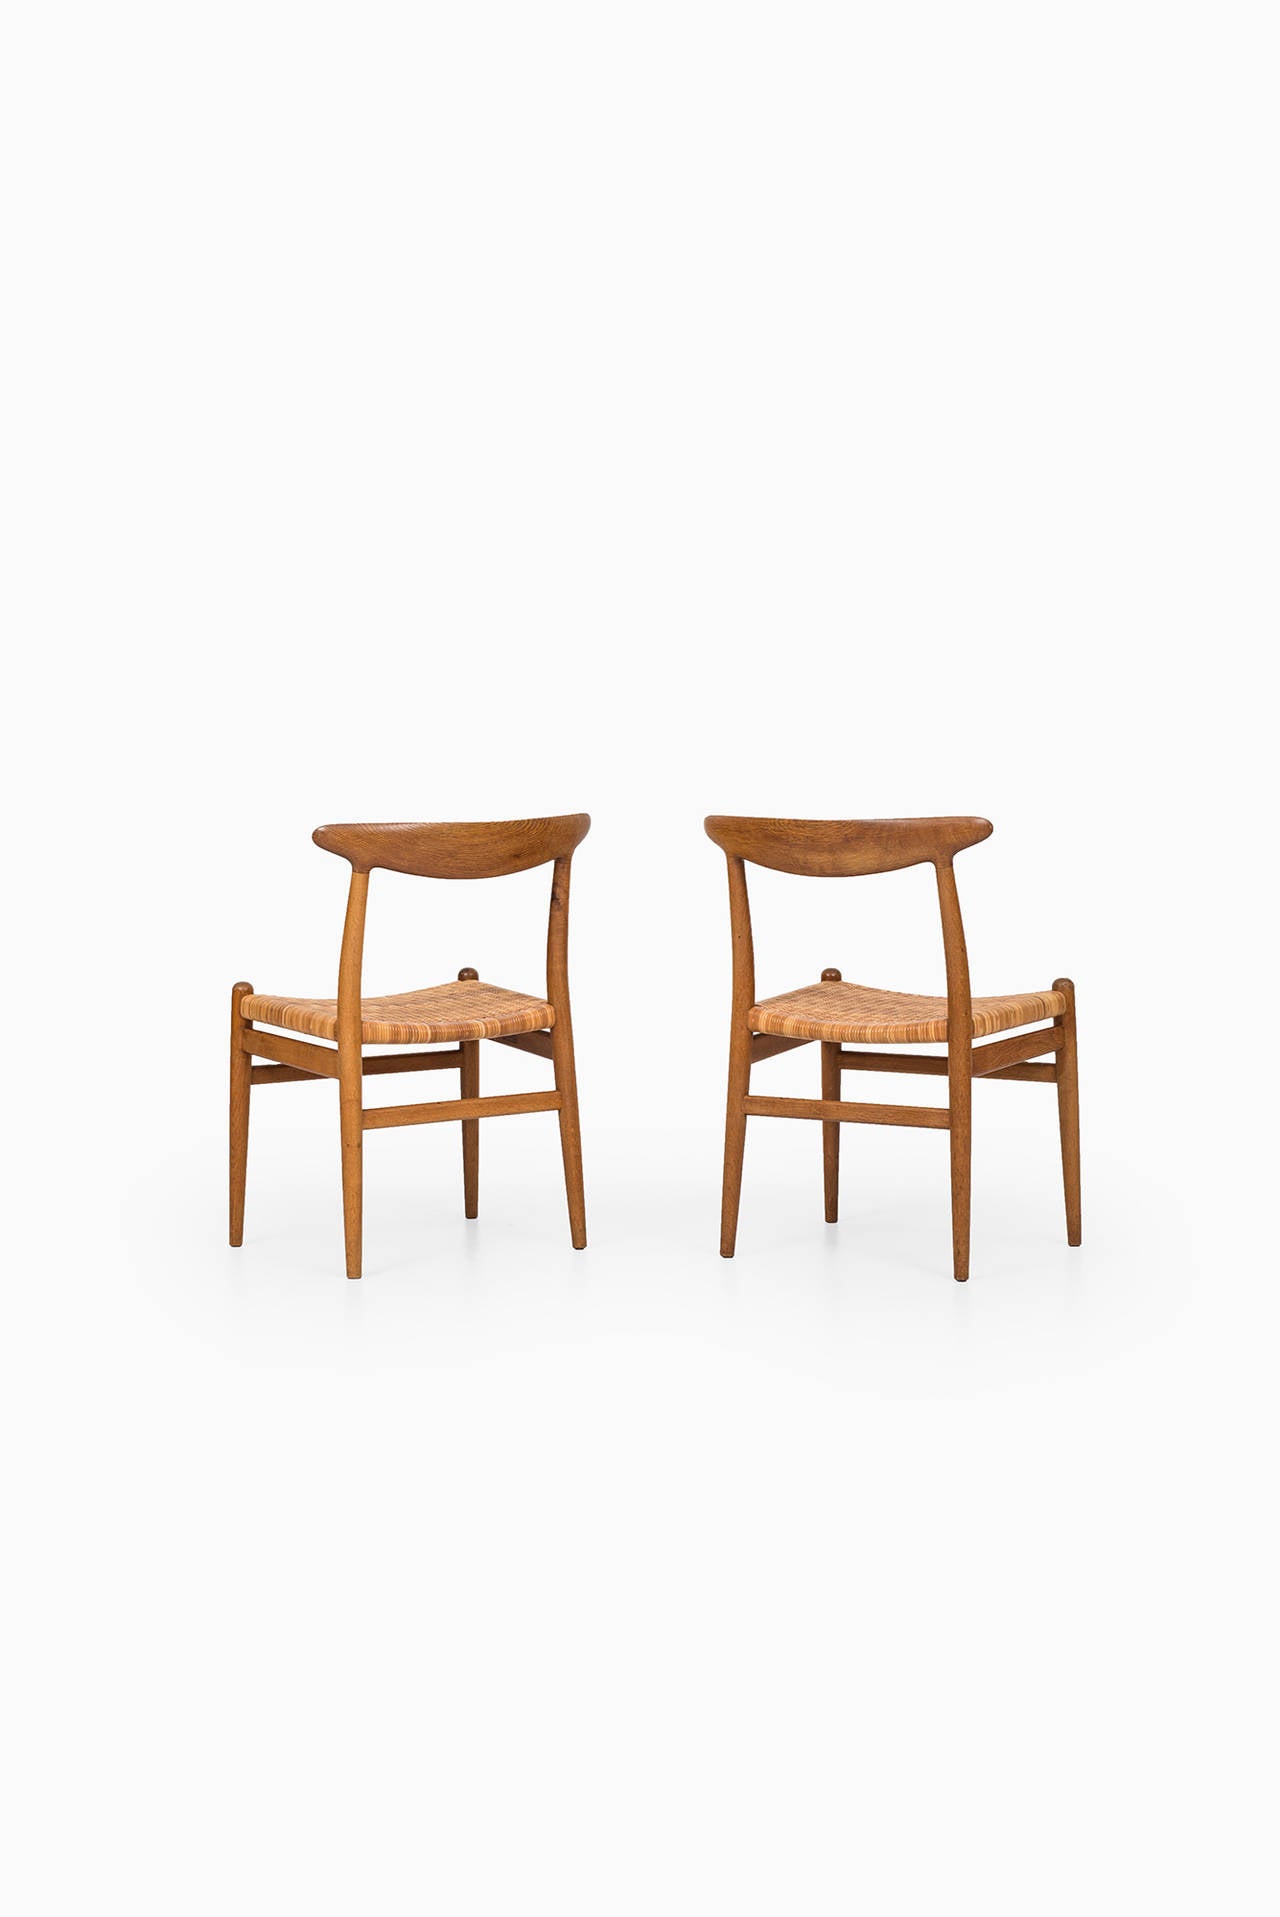 Hans Wegner Dining Chairs Model W2 by C.M Madsen in Denmark 2